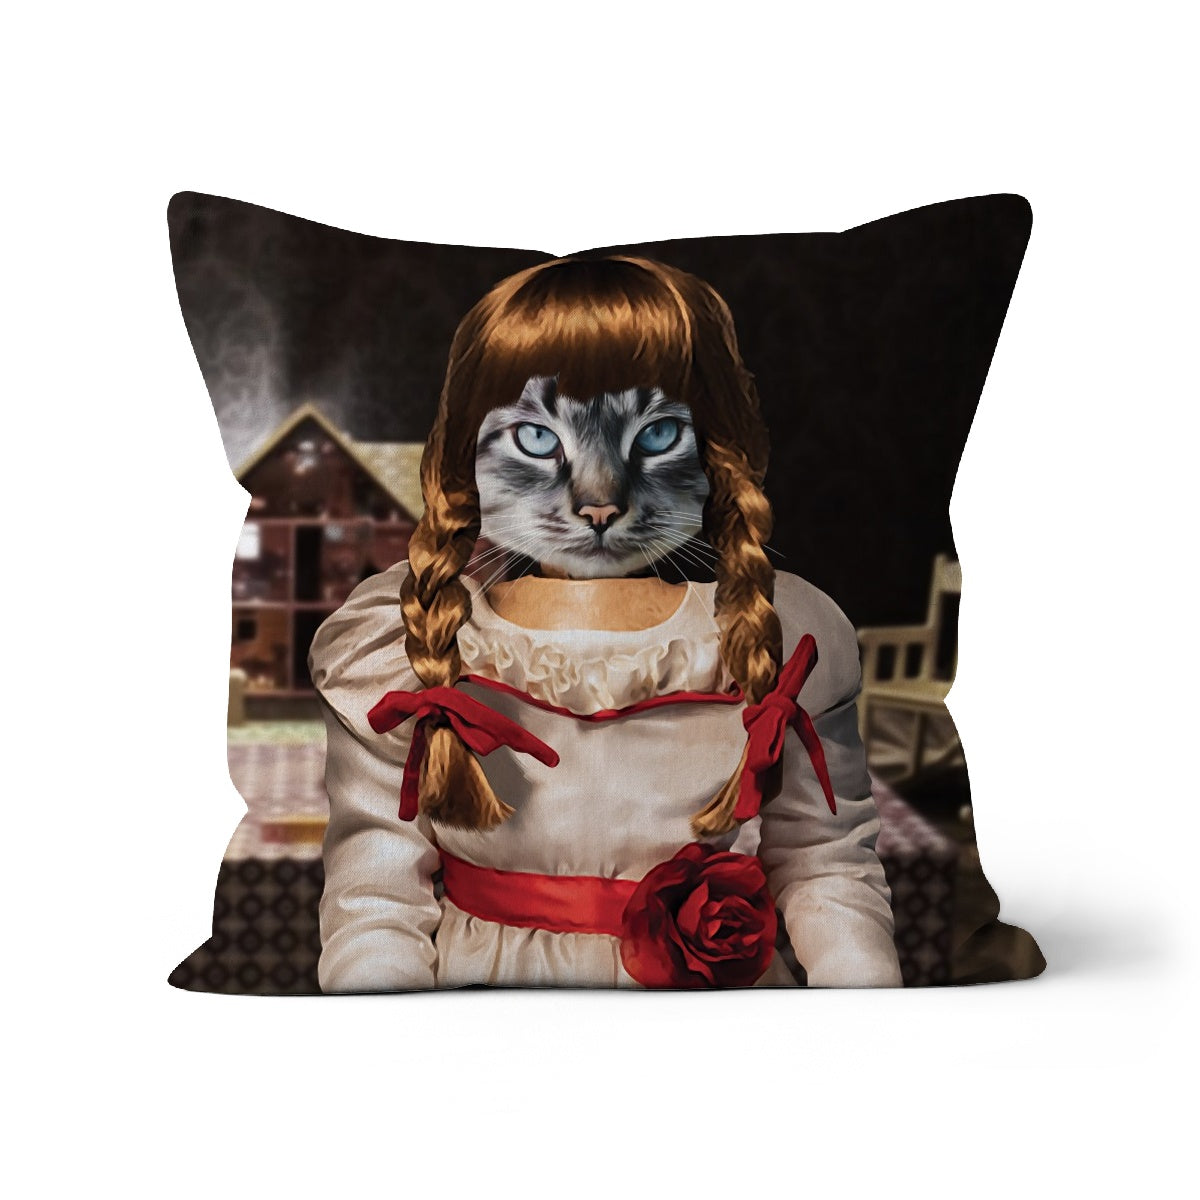 The Annabelle: Custom Pet Pillow